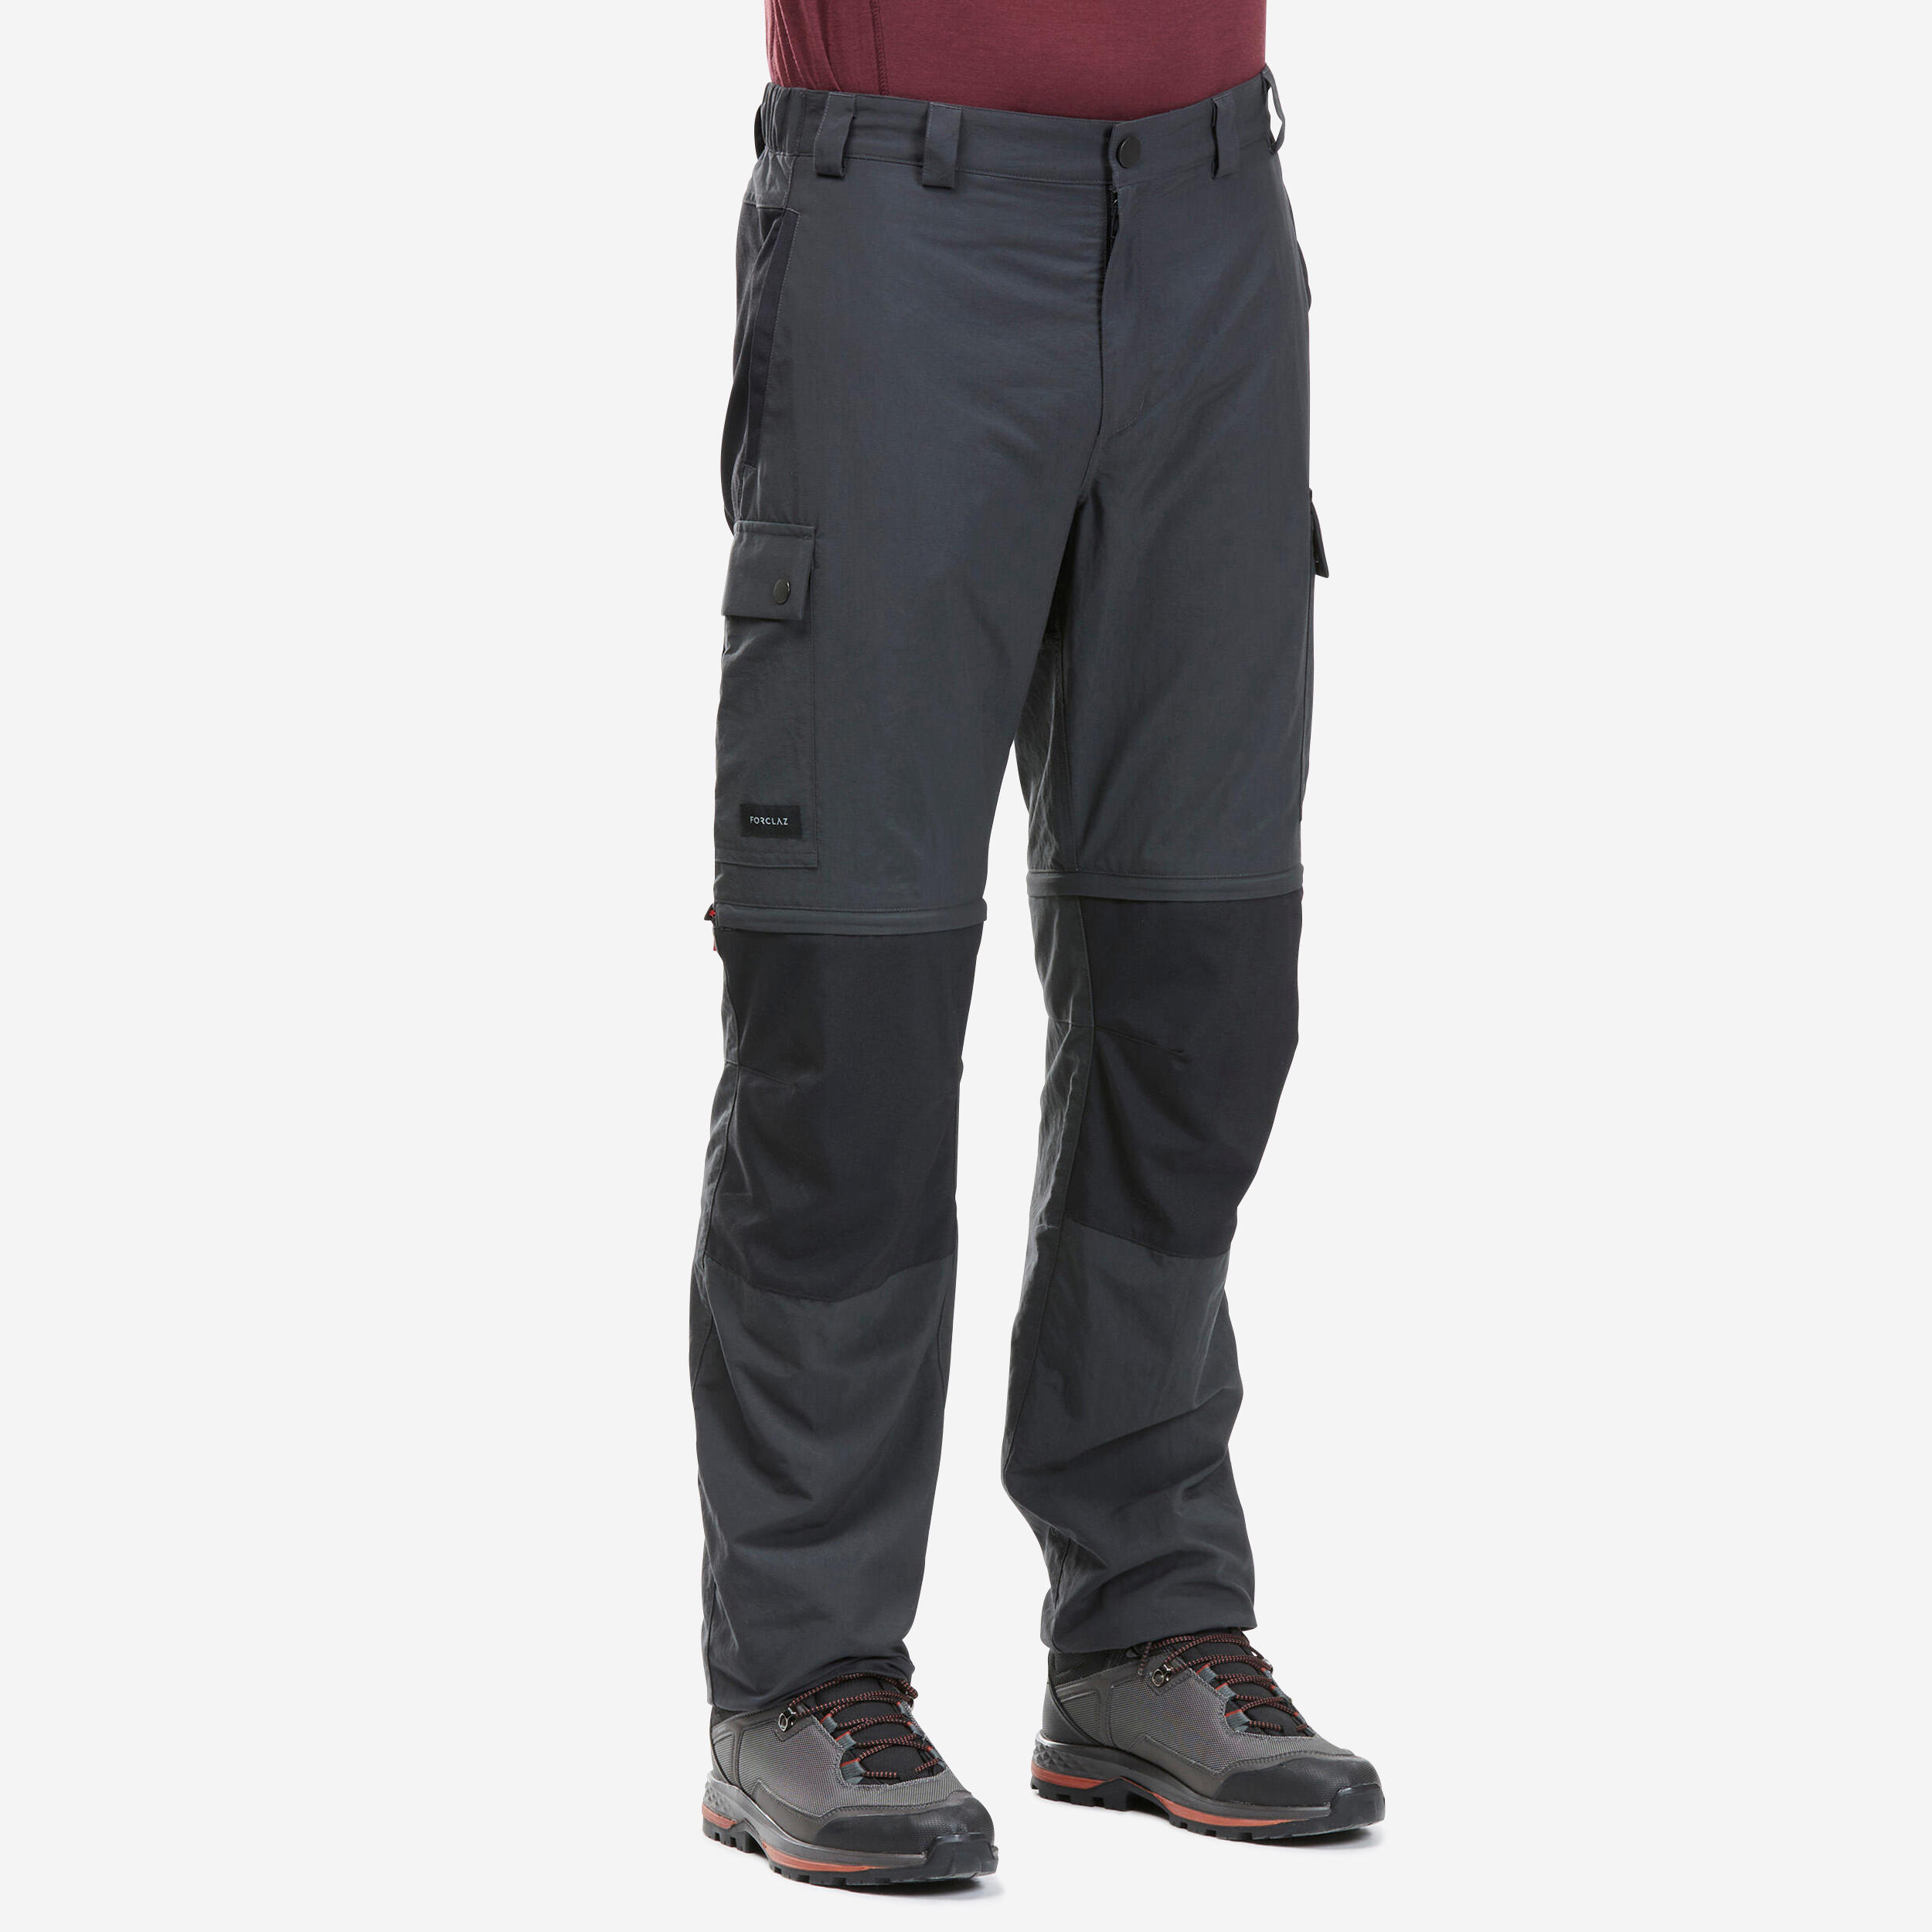 Kids Combat Trouser Zip Off 2 in 1 Short US BDU Army Style Hiking Cargo  Pants | eBay